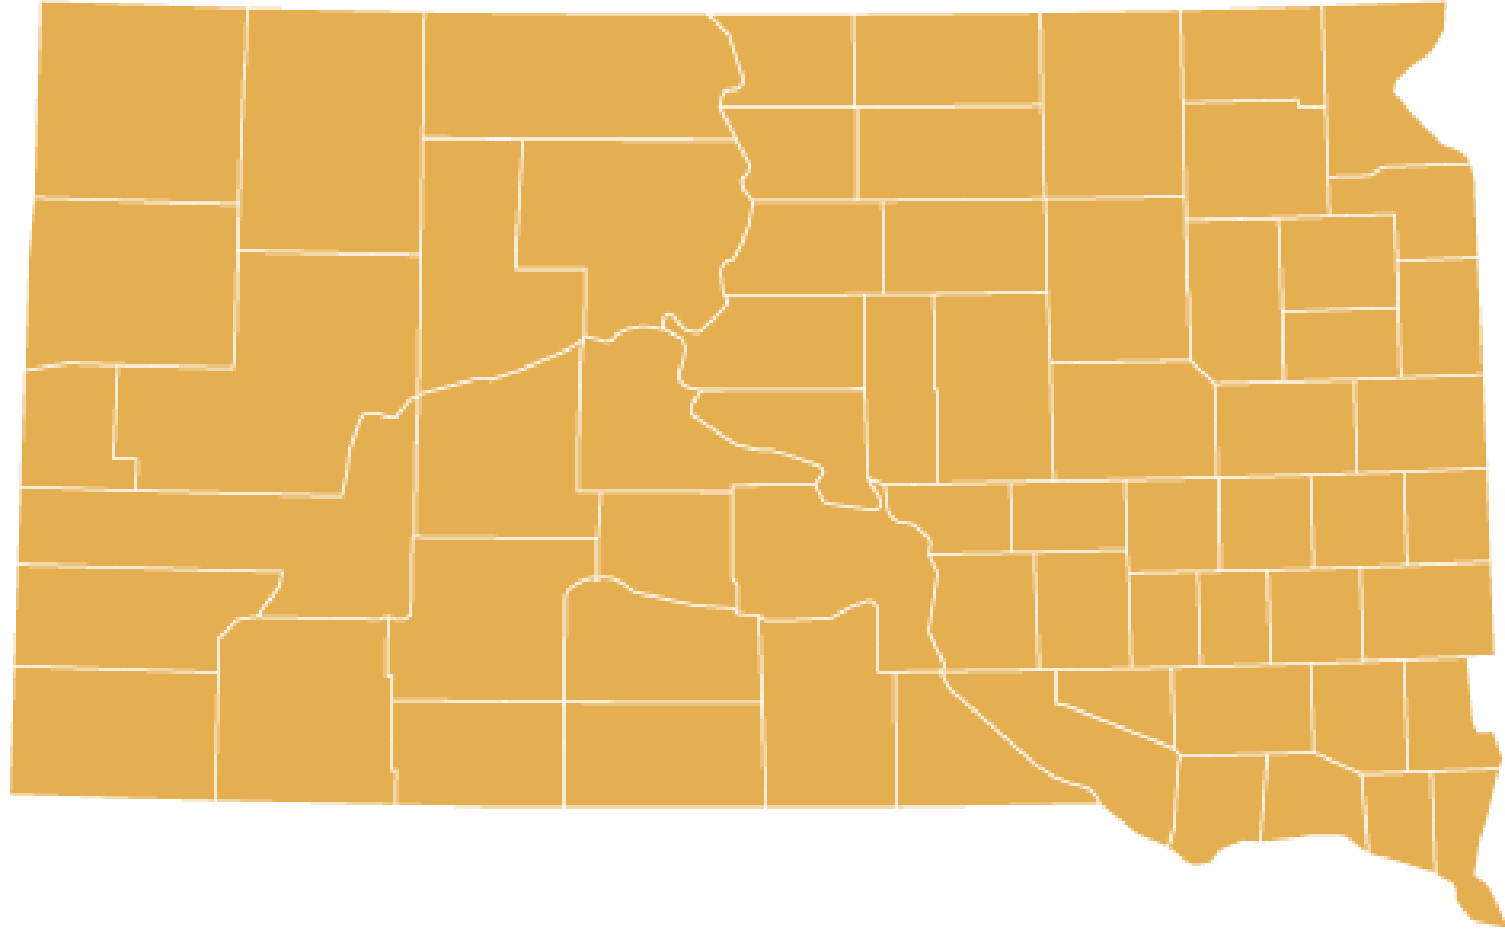 South Dakota Map